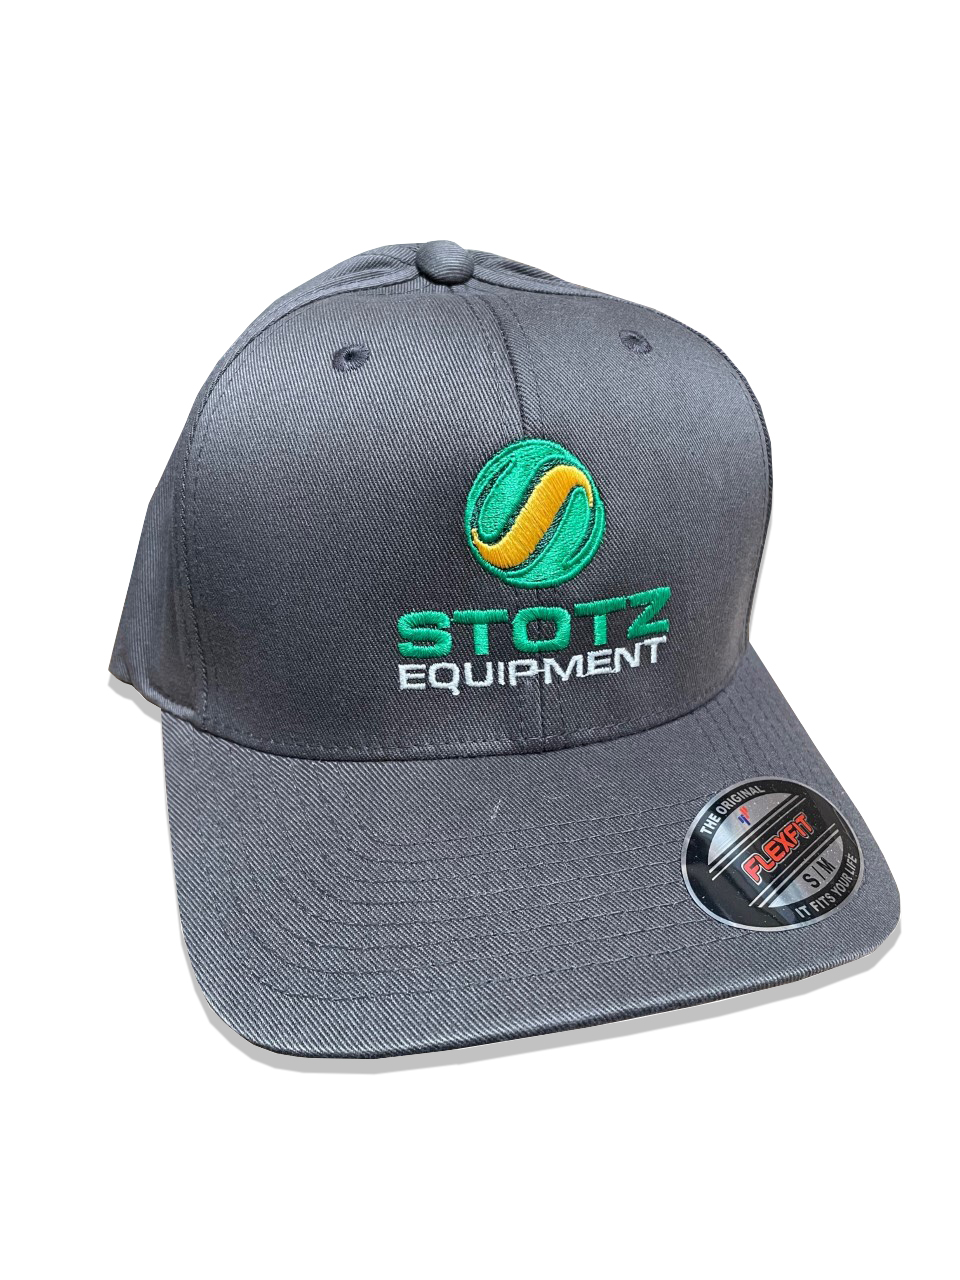 AG Grey Hat – Center | Equipment Marketing Stotz Flexfit